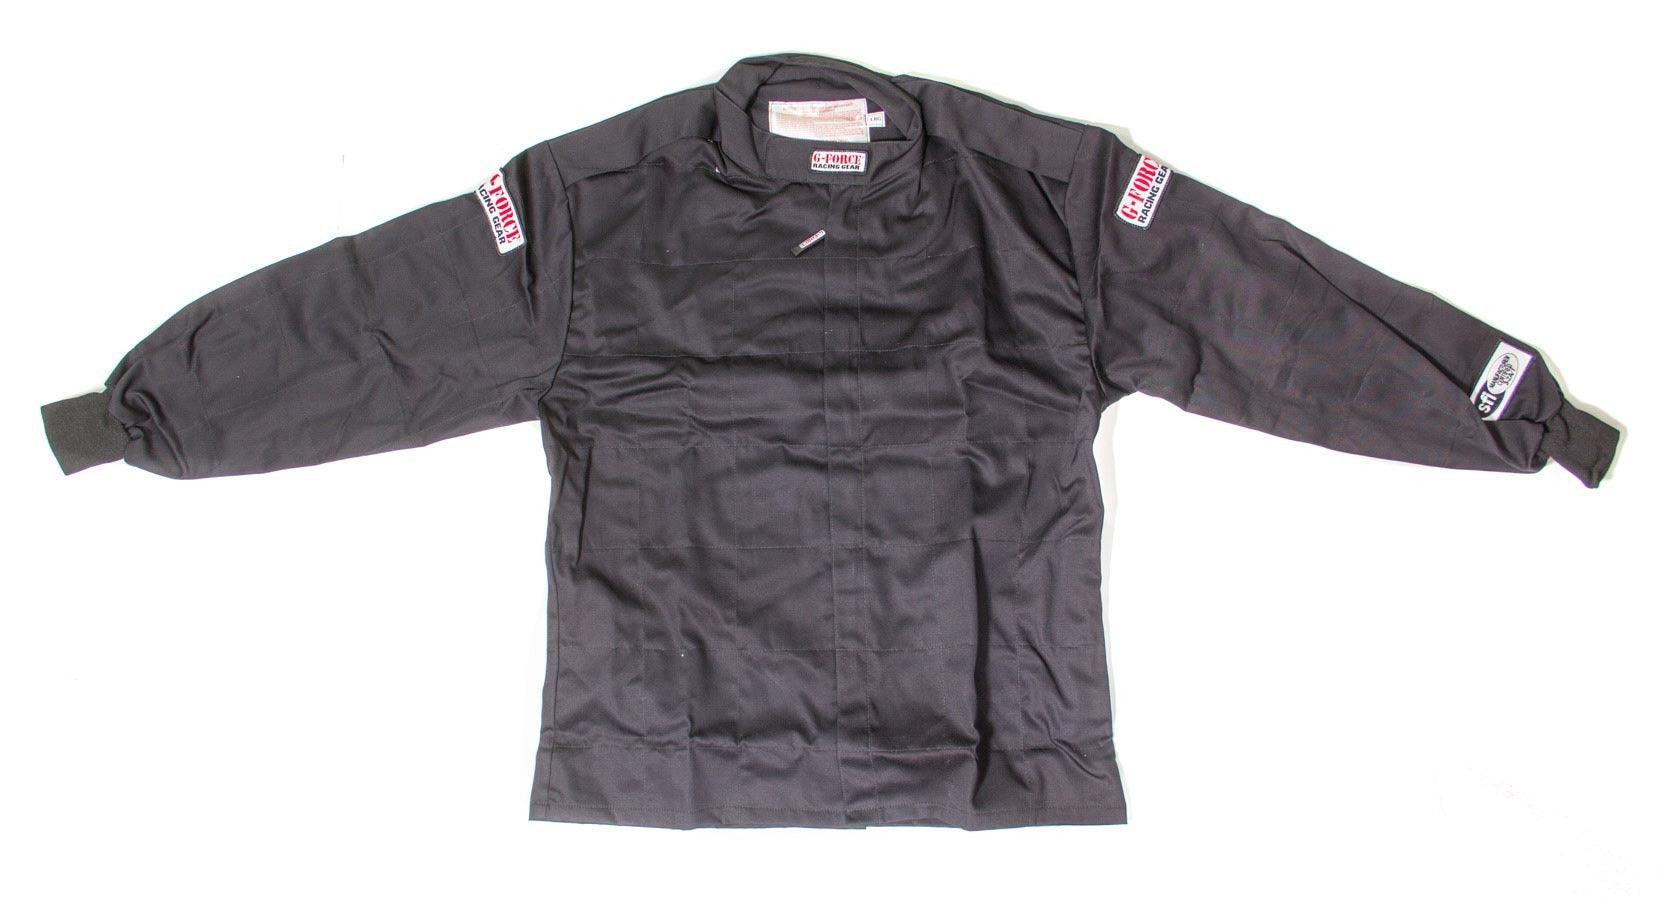 GF125 Jacket Only XX-Large Black - Burlile Performance Products